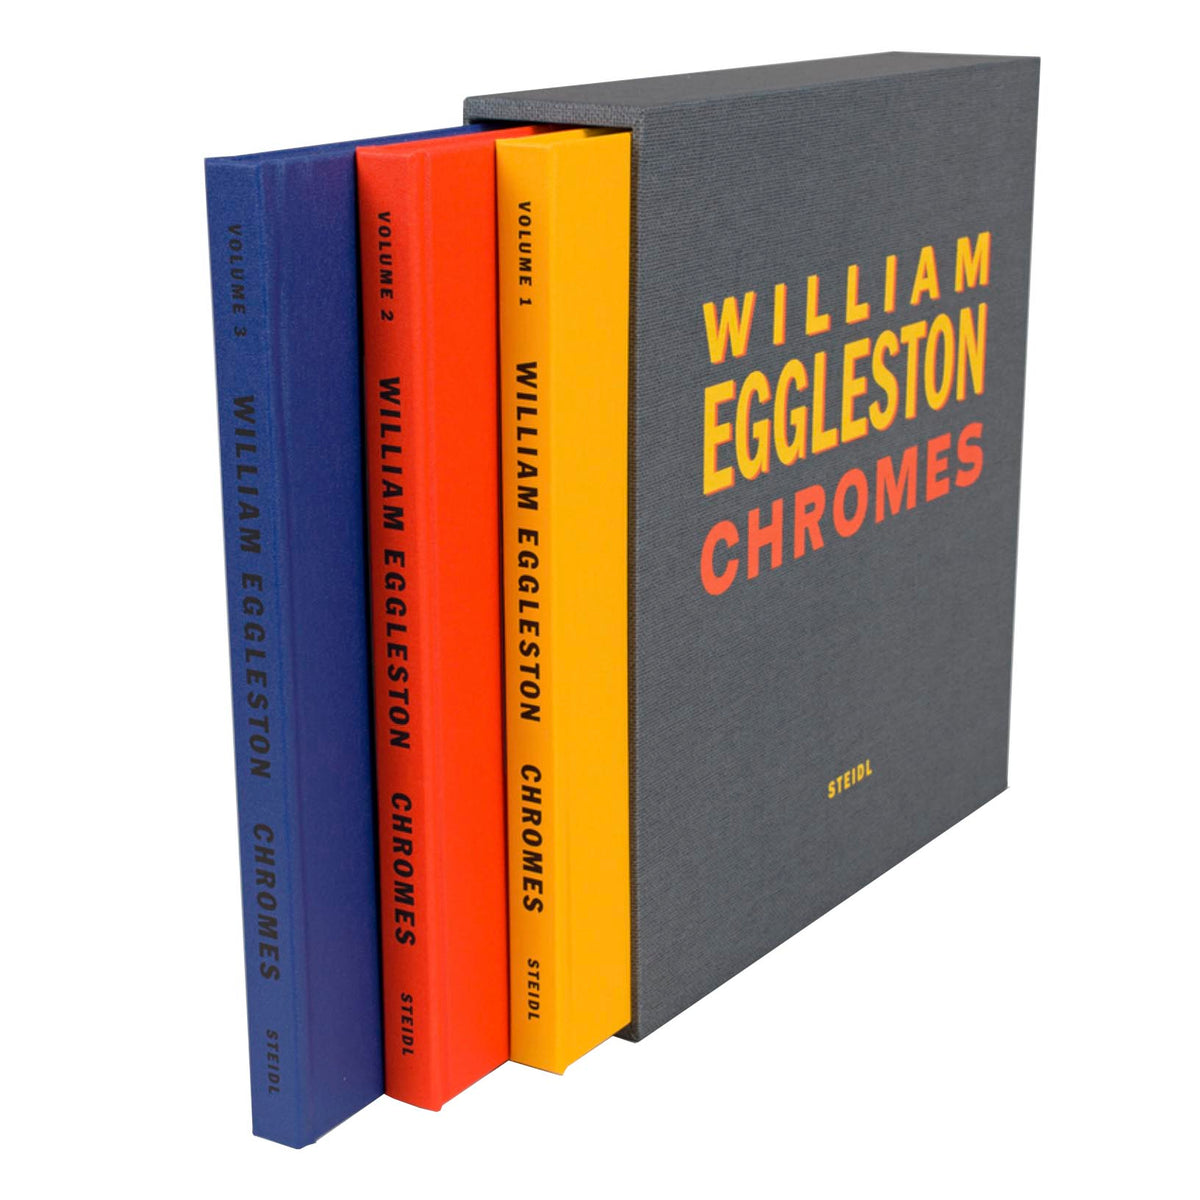 CHROMES by William Eggleston – Kominek